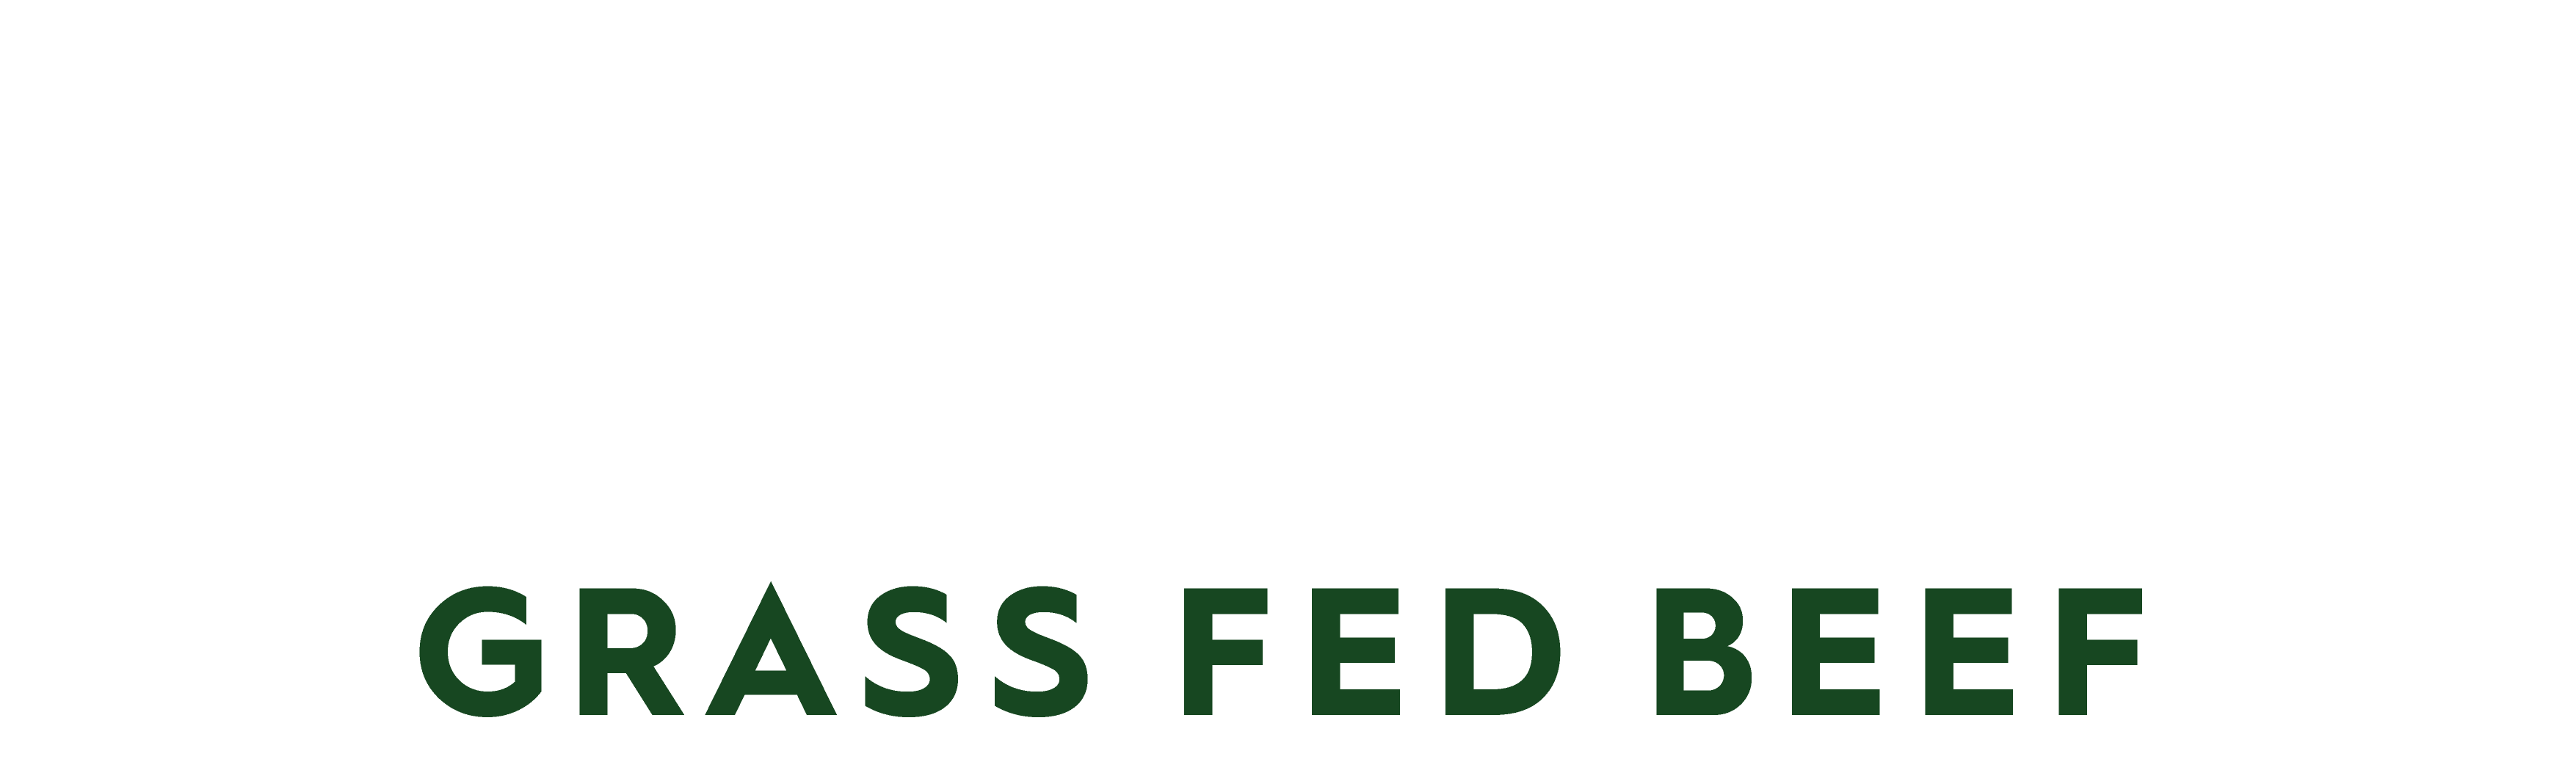 Diamantina Grass Fed Beef logo